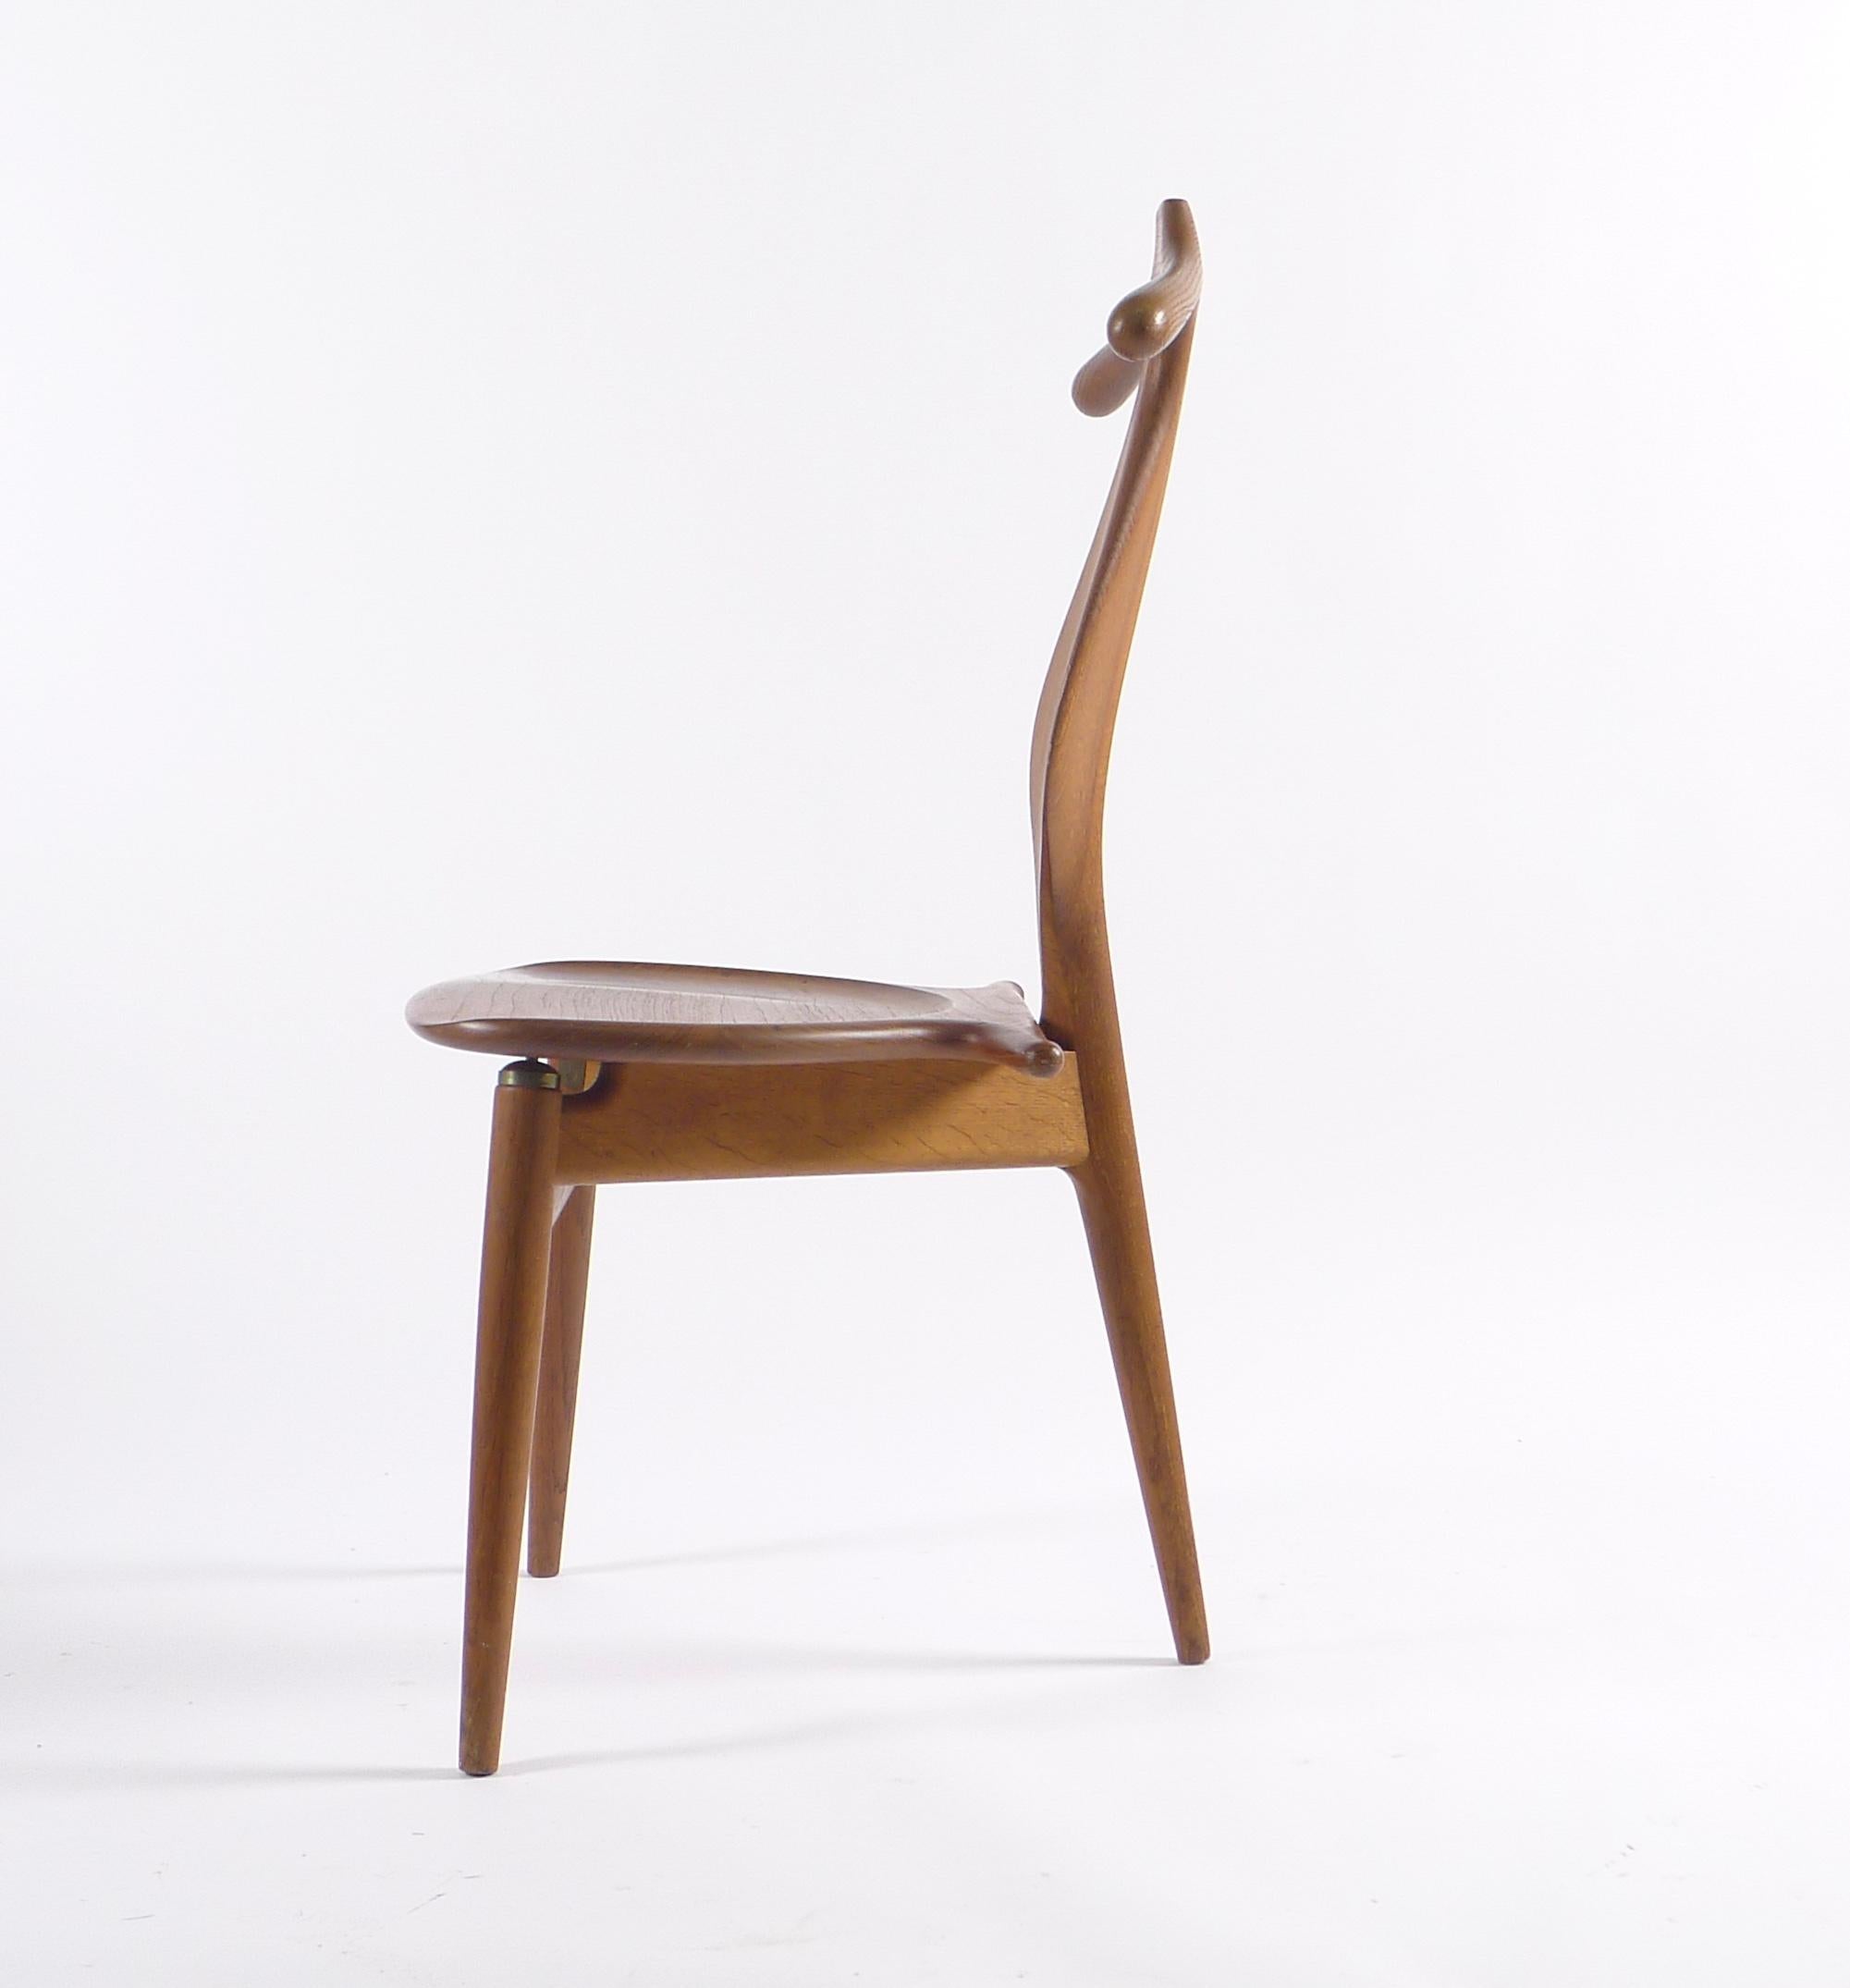 Hans J Wegner (1914-2007), Valet Chair, model no. JH540, teak and oak, original edition produced by Johannes Hansen, 1953. 

Underside impressed with manufacturer’s mark: JOHANNES HANSEN/COPENHAGEN/DENMARK

This rare chair is one of the original